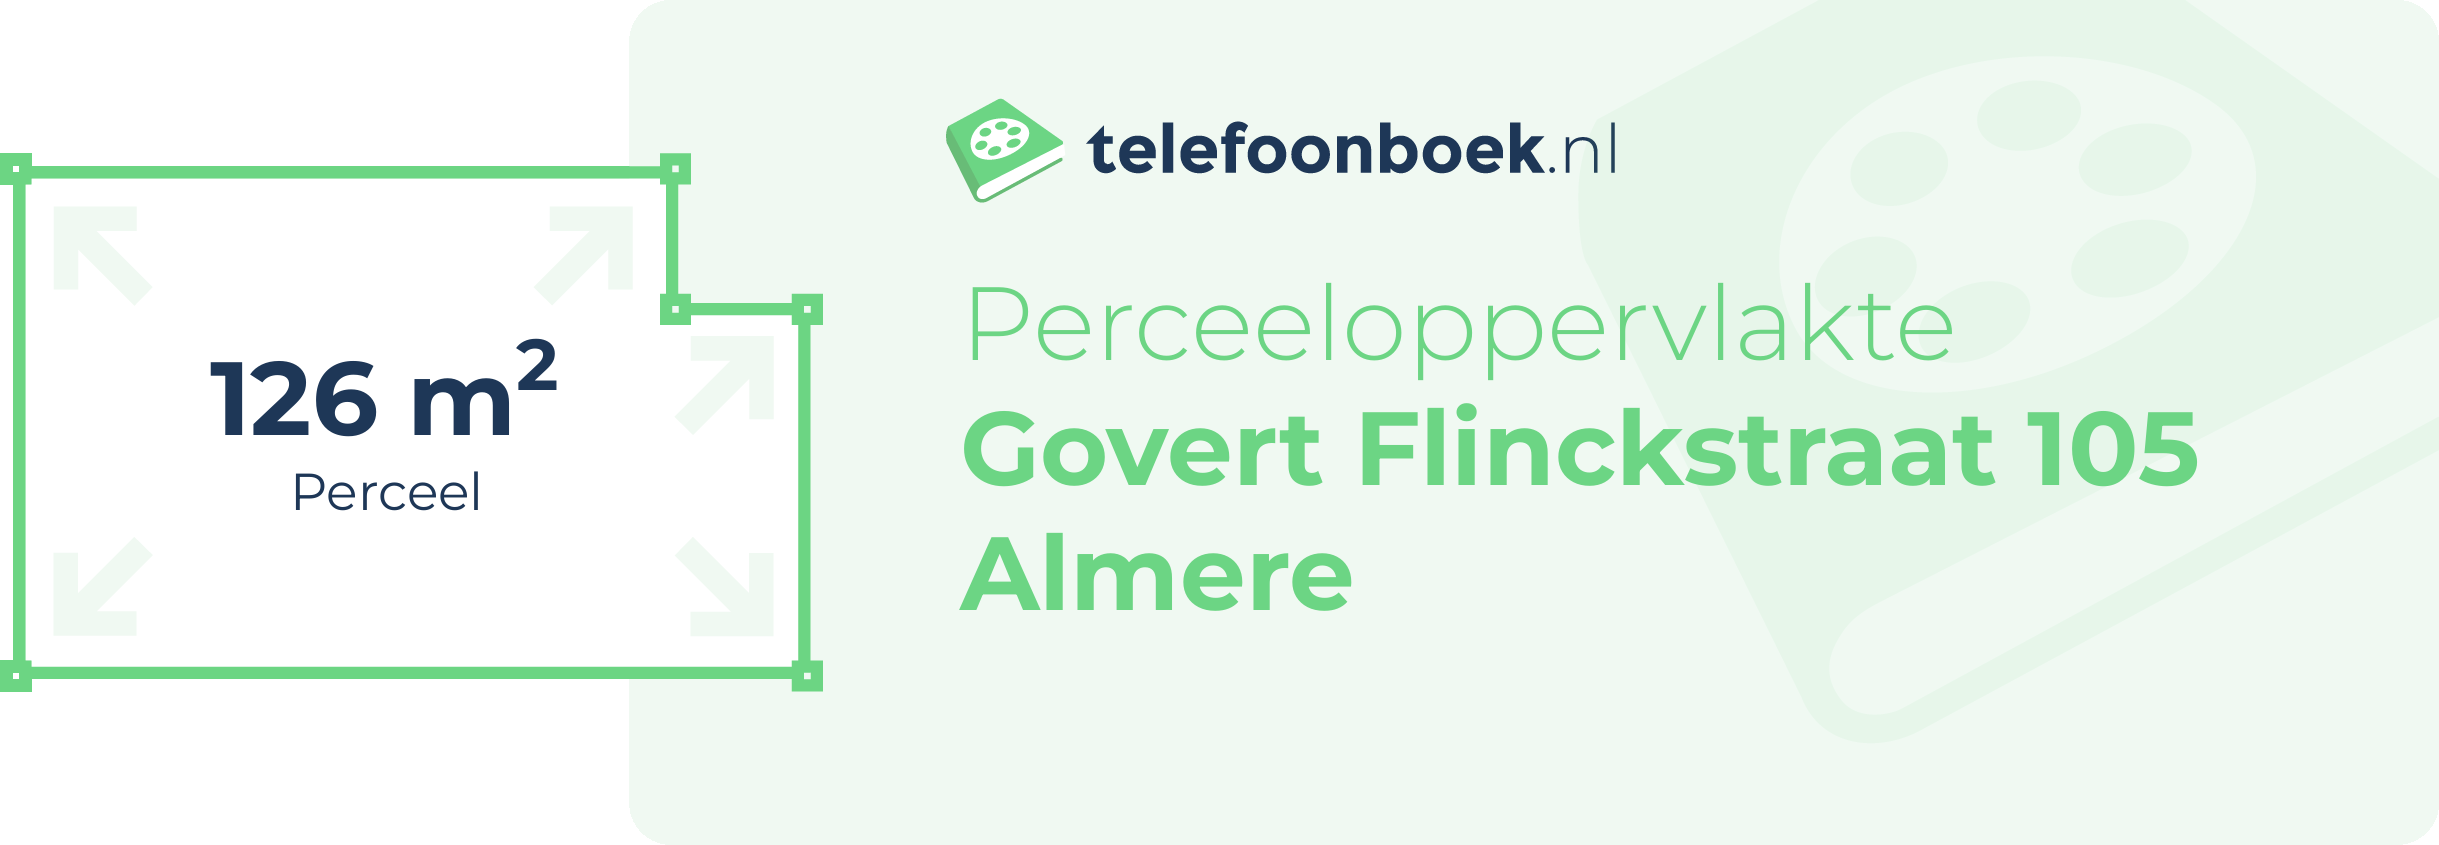 Perceeloppervlakte Govert Flinckstraat 105 Almere